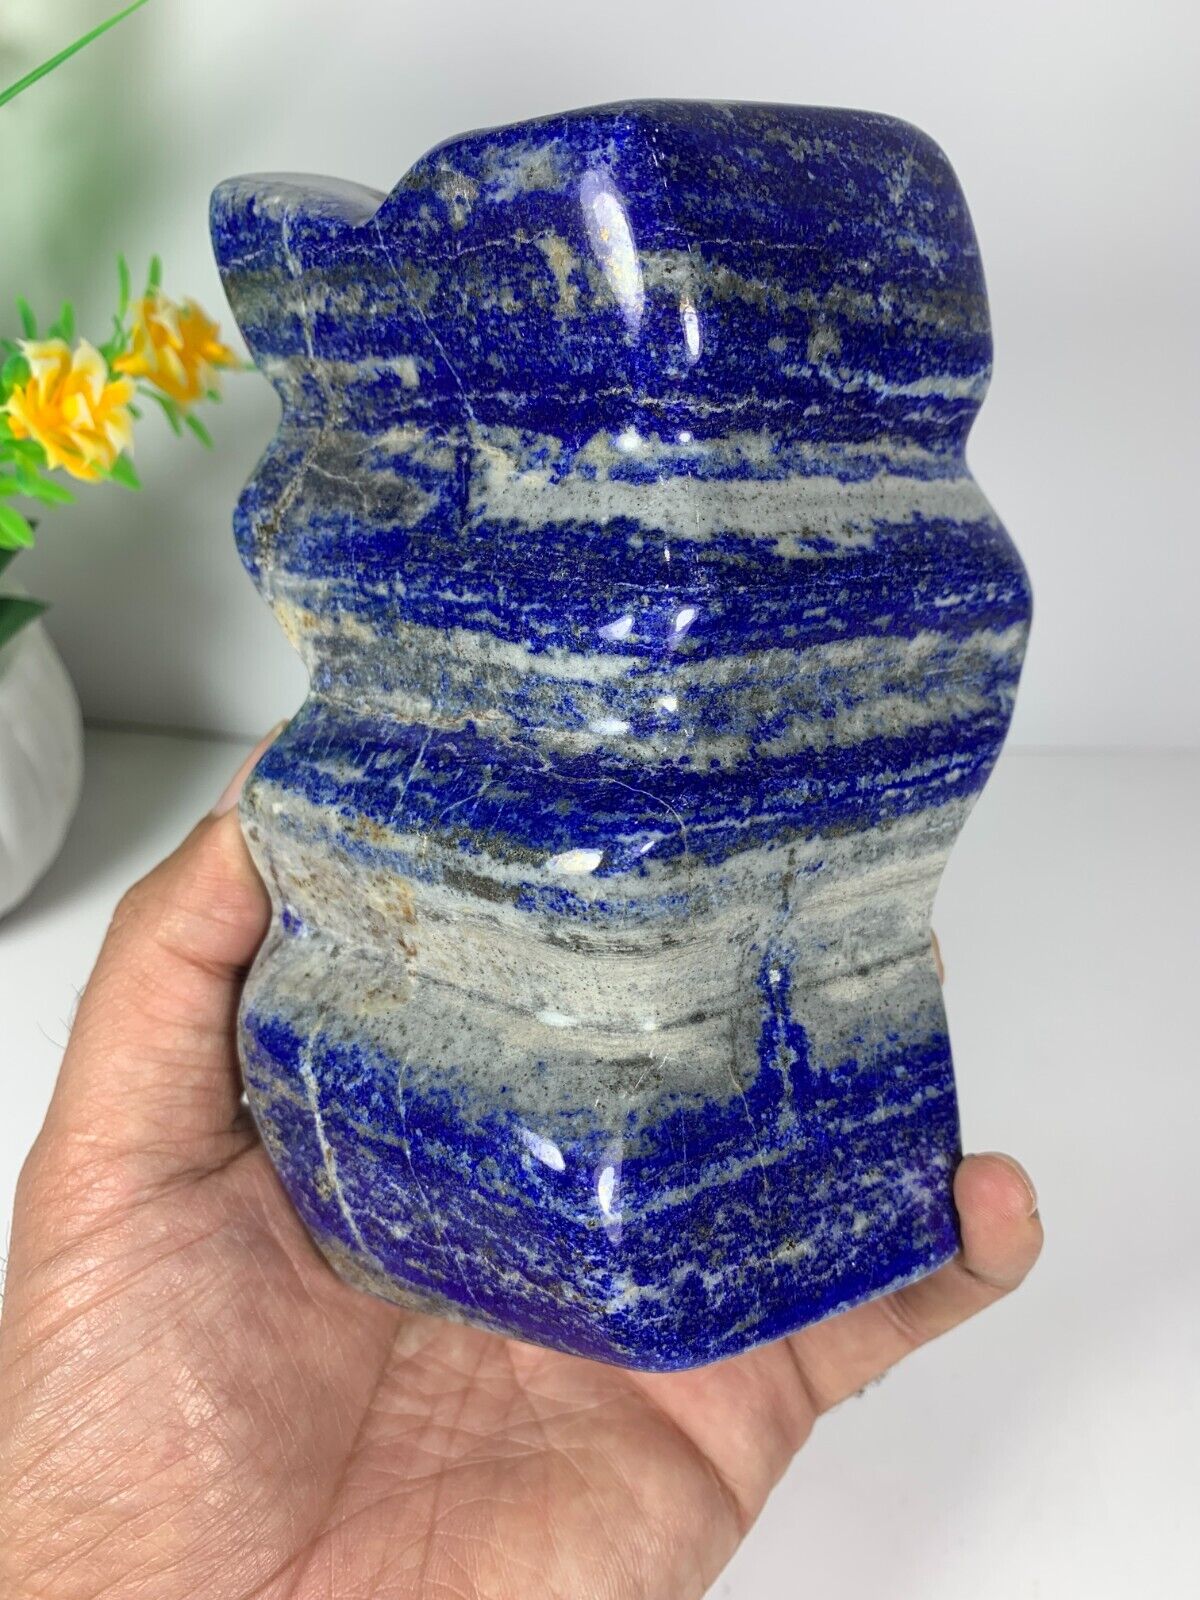 1360 Gram Lapis Lazuli Freeform Rough Polished Stone Tumble Crystal with Pyrite